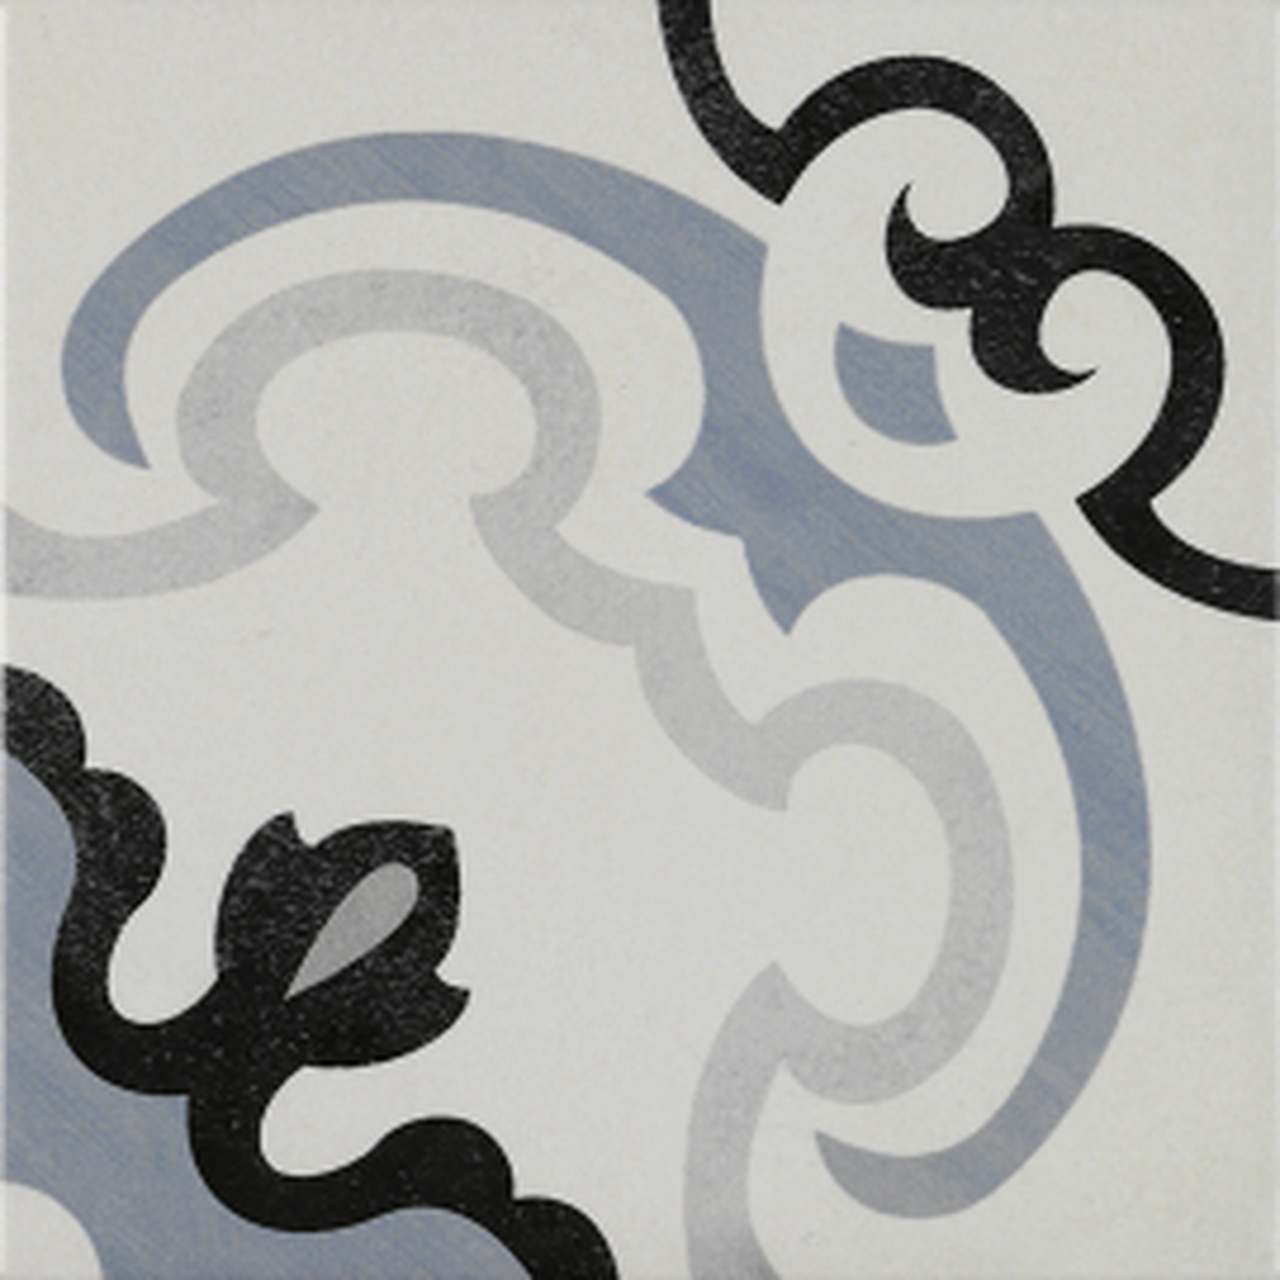 Art Pop Collection - 1280x1280 Wallpaper - teahub.io